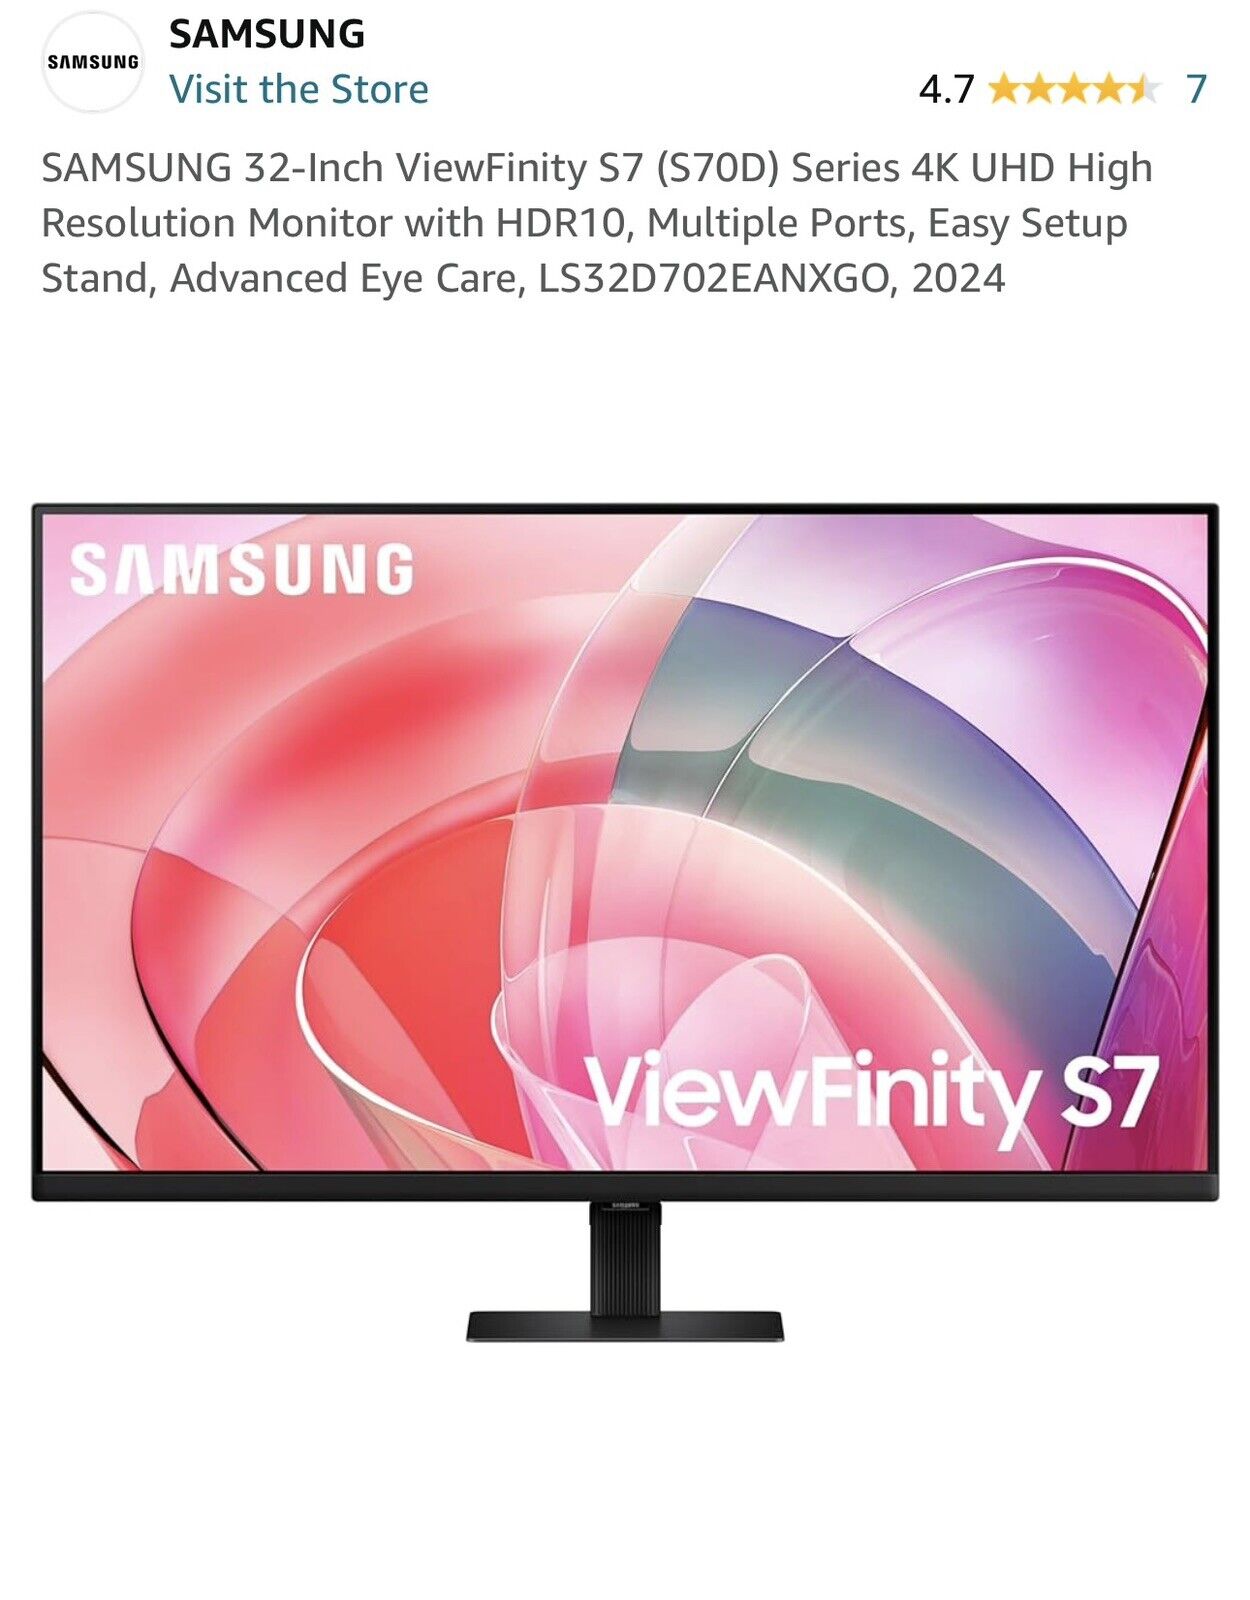 SAMSUNG 32-Inch ViewFinity S7 (S70D) Series 4K UHD High Resolution Monitor